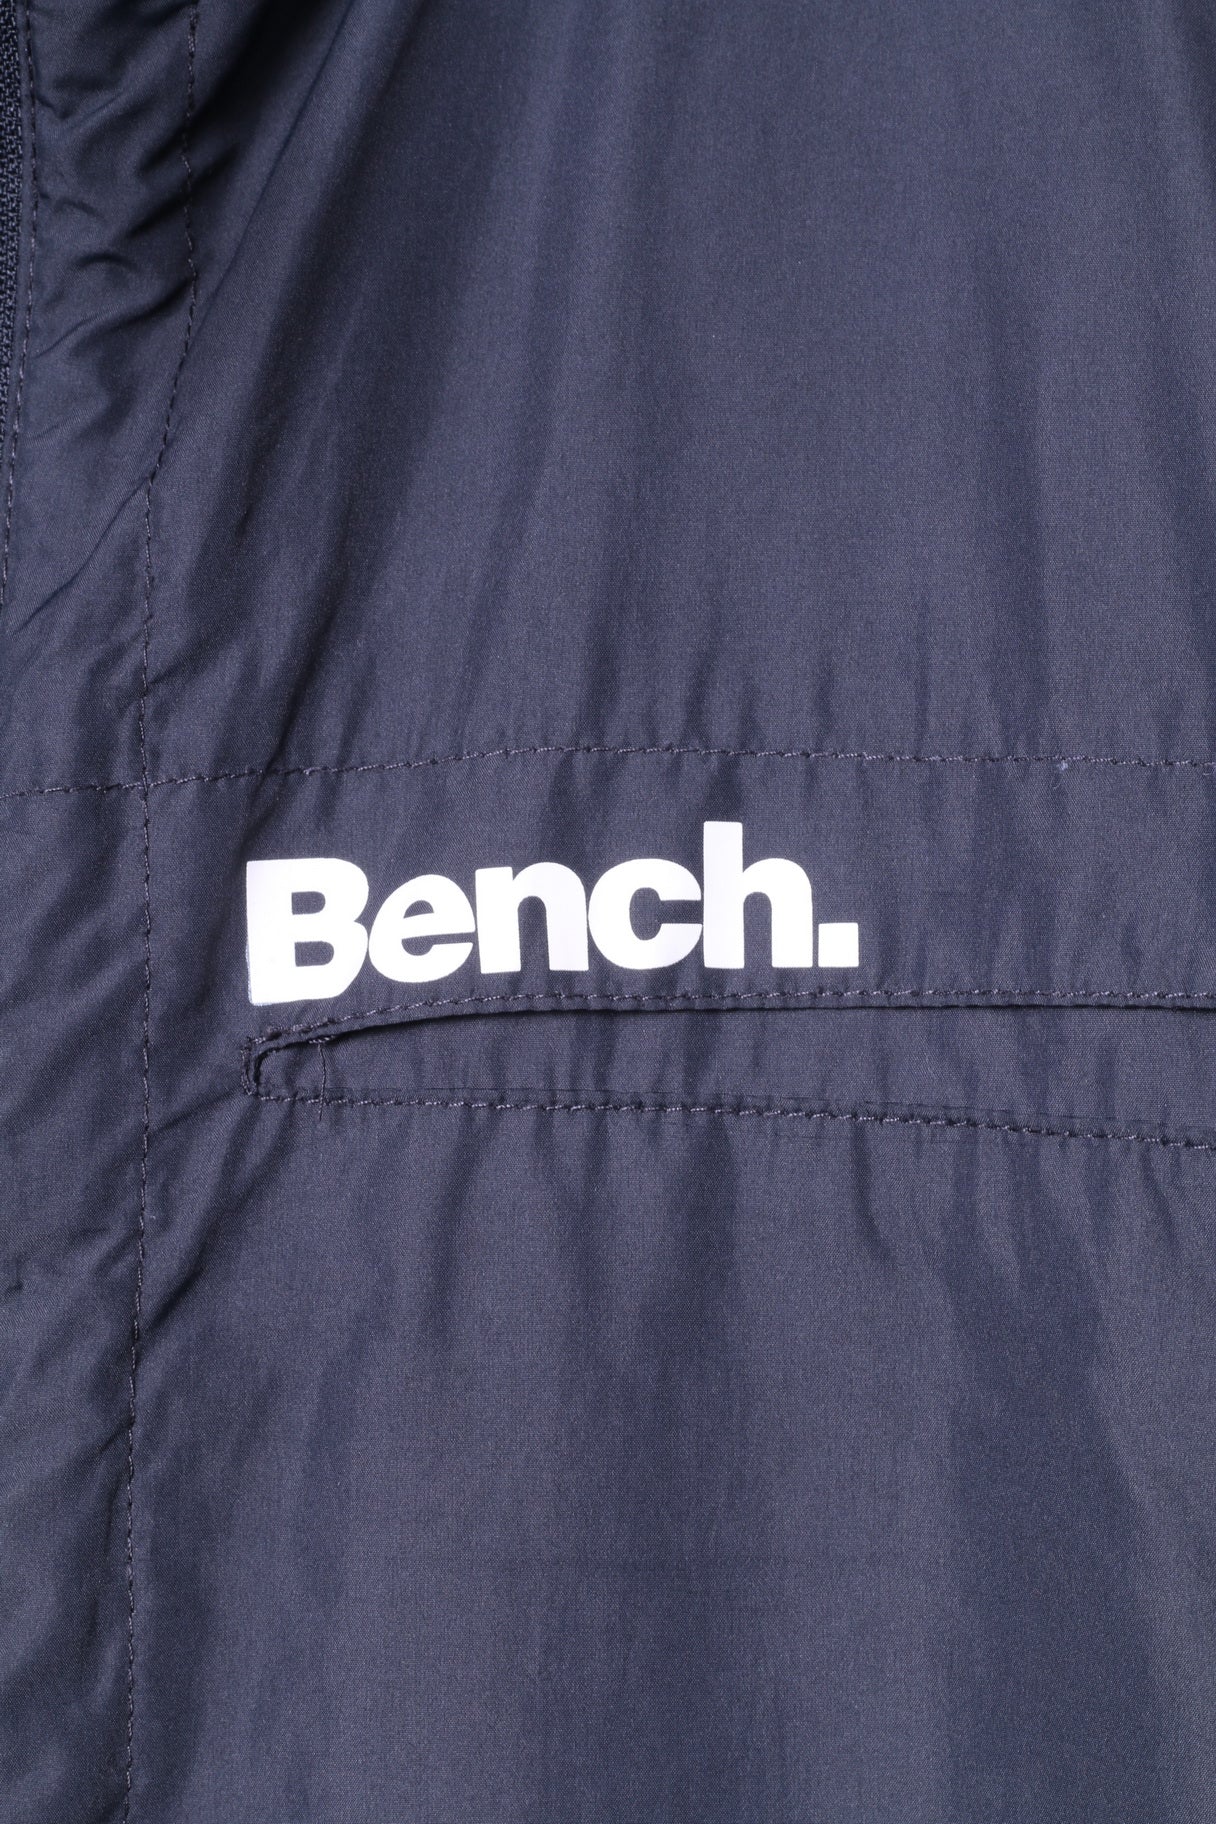 Bench Mens M Jacket Black Lightweight Zip Up Run Sportswear Top